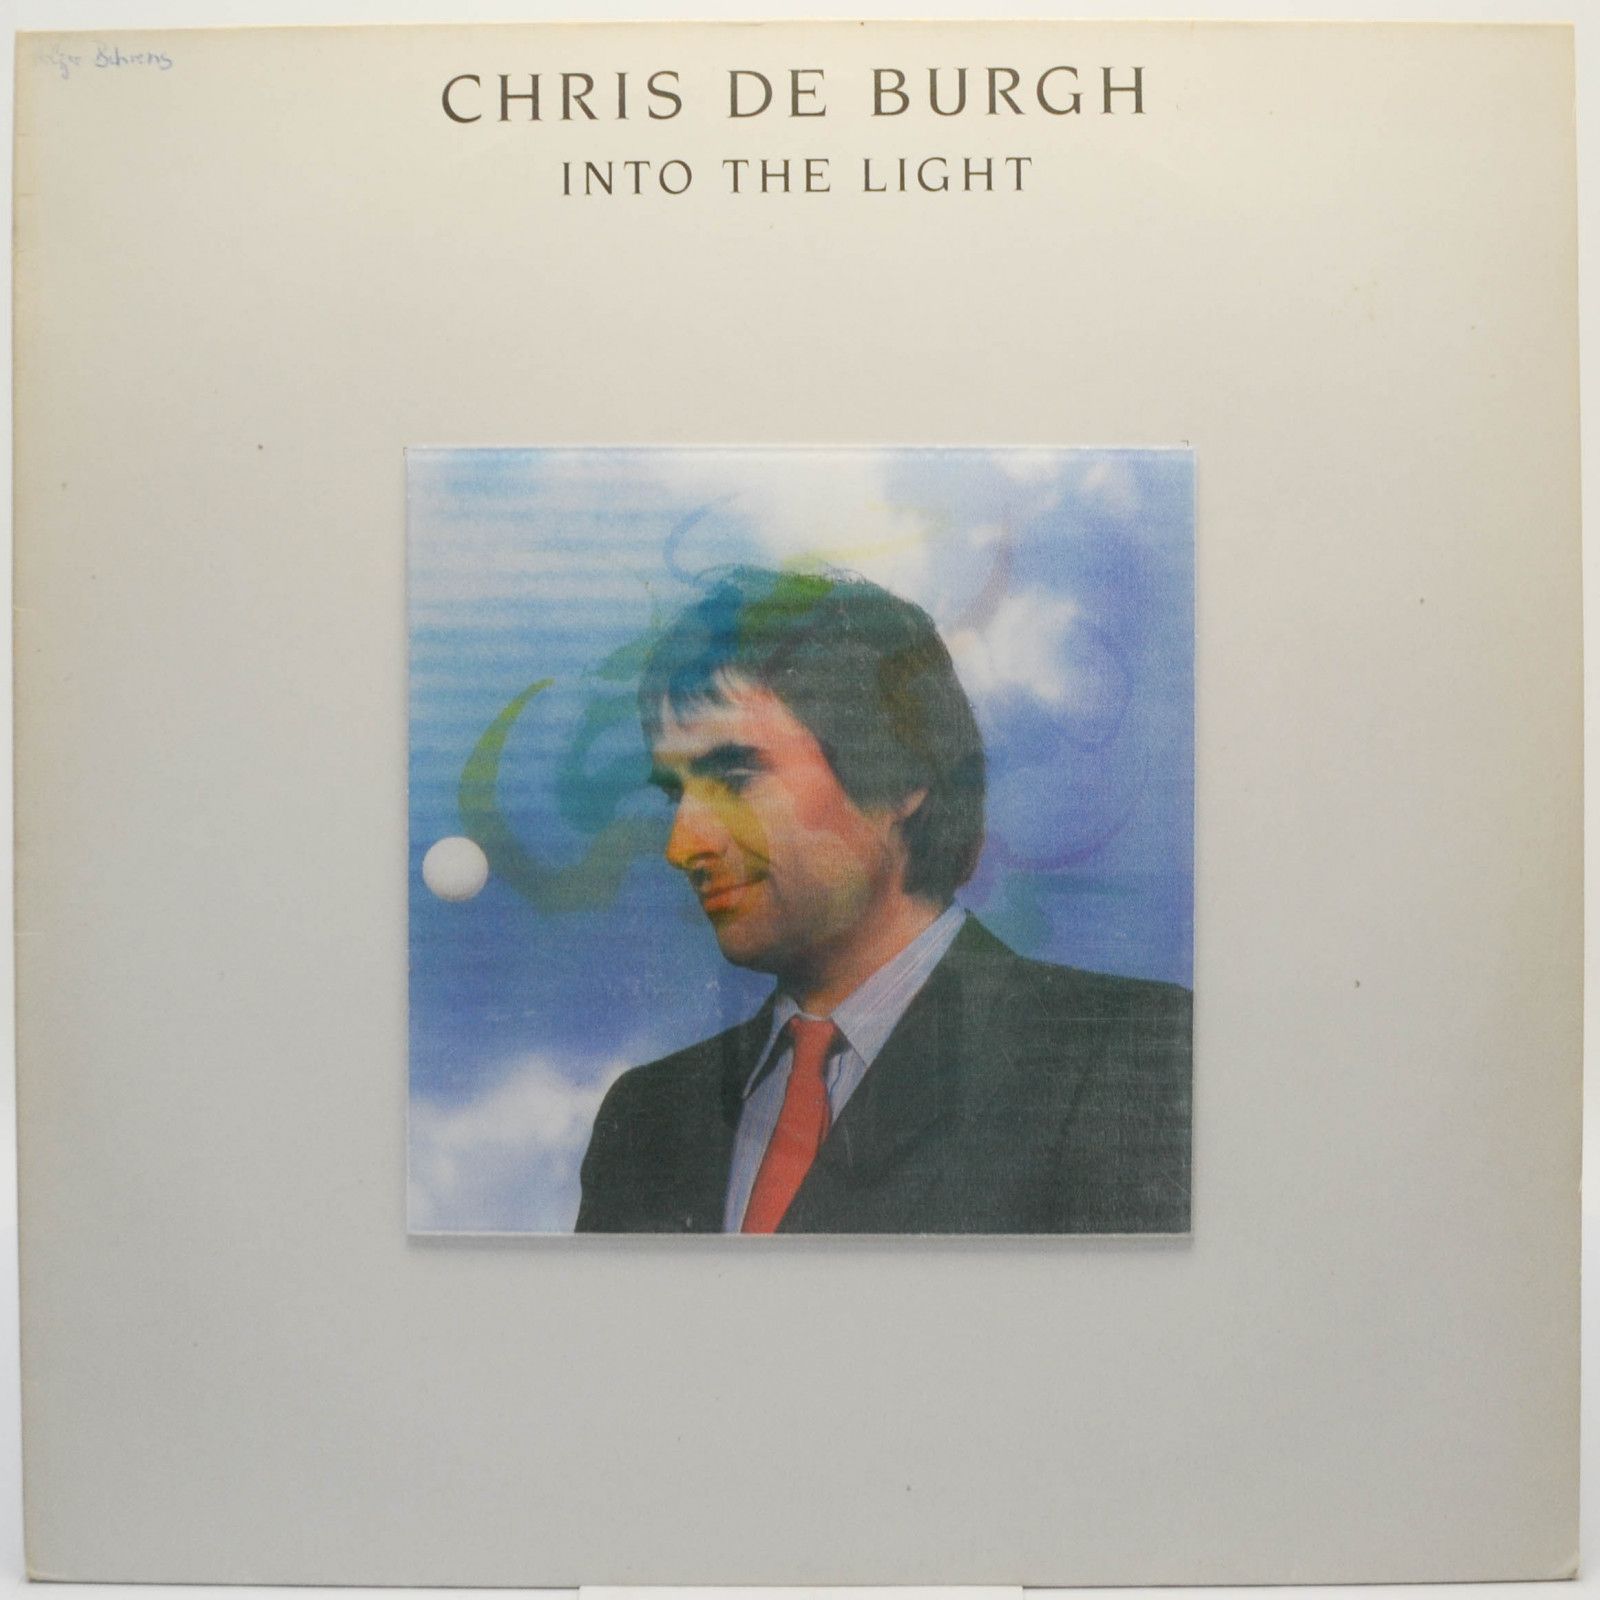 Chris de Burgh — Into The Light (Lenticular picture), 1986